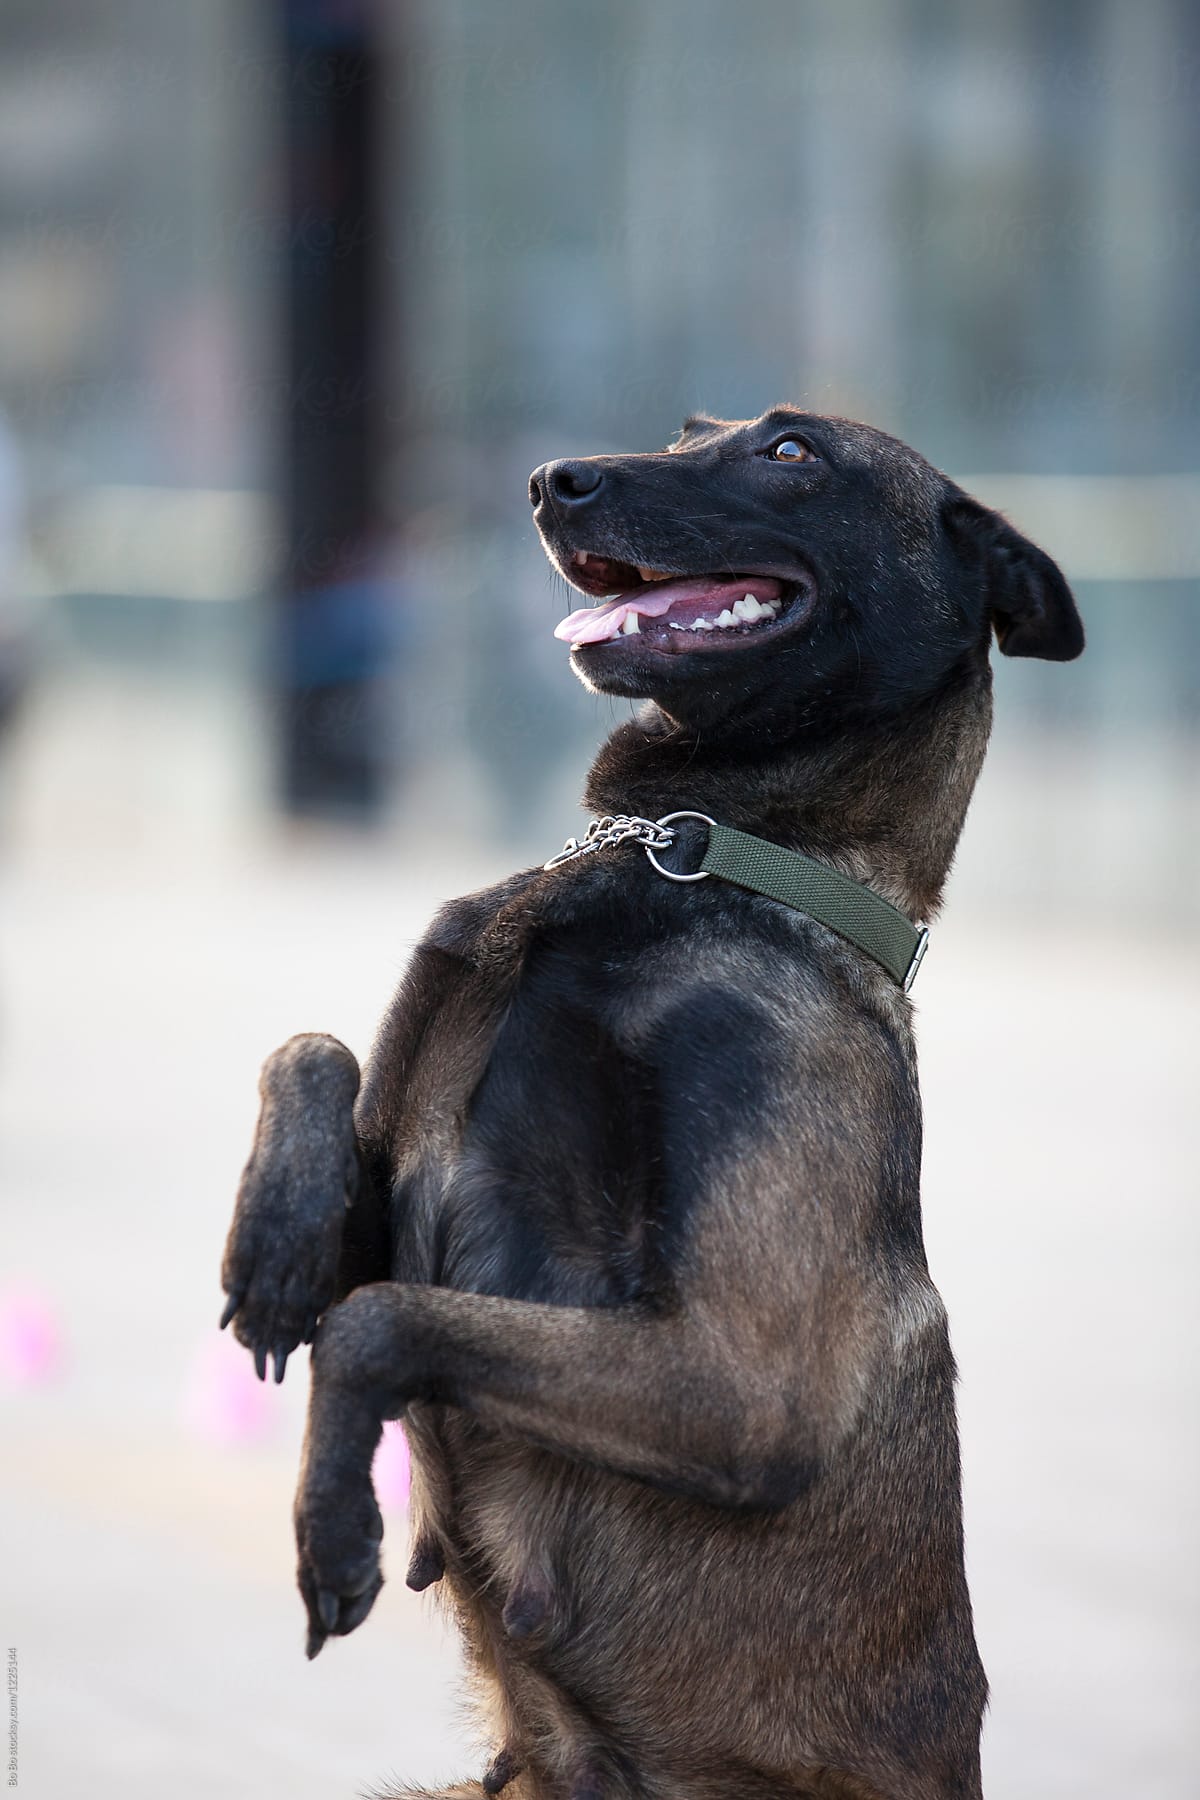 "One Black Belgian Malinois Dog Follow Order" by Stocksy Contributor